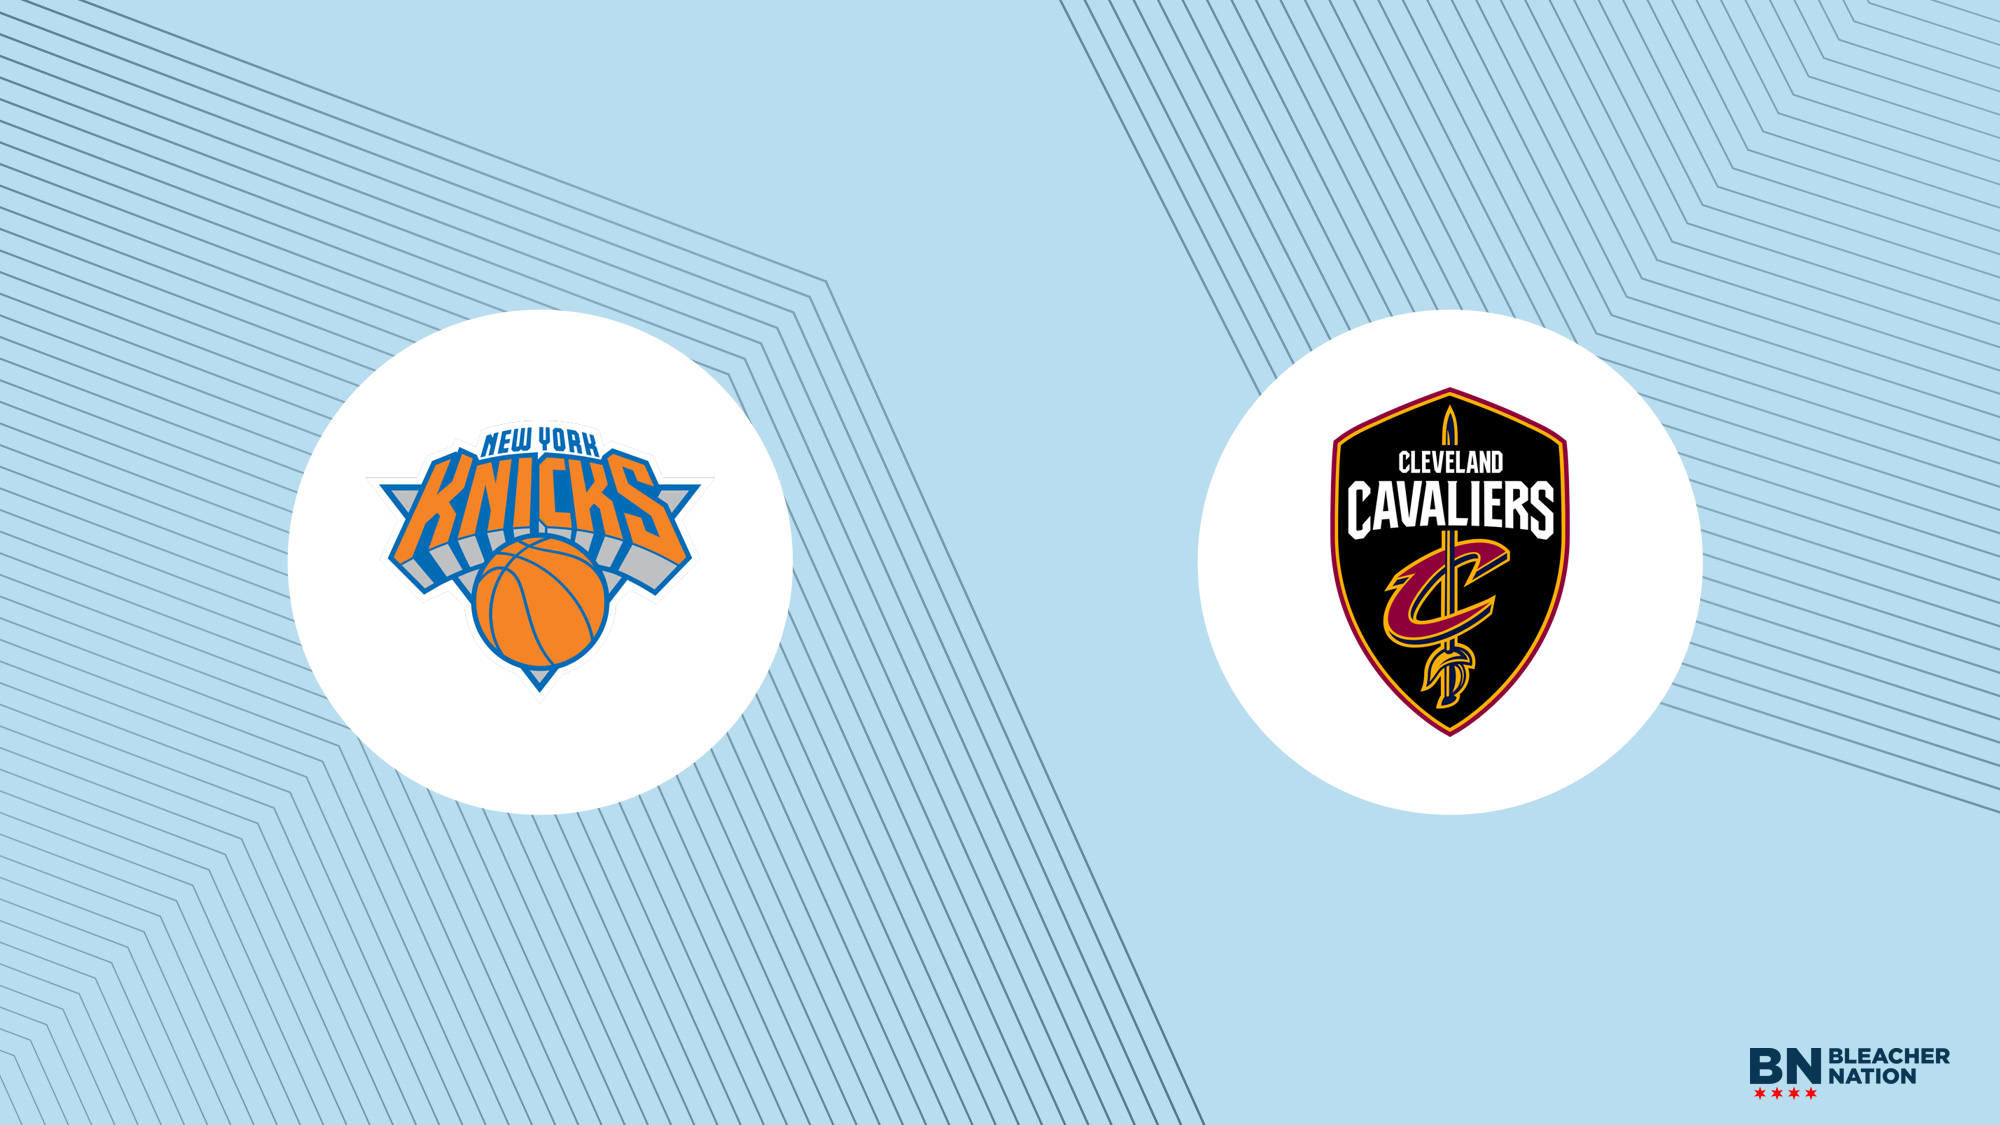 New York Knicks vs. Cleveland Cavaliers - Who Will Win?